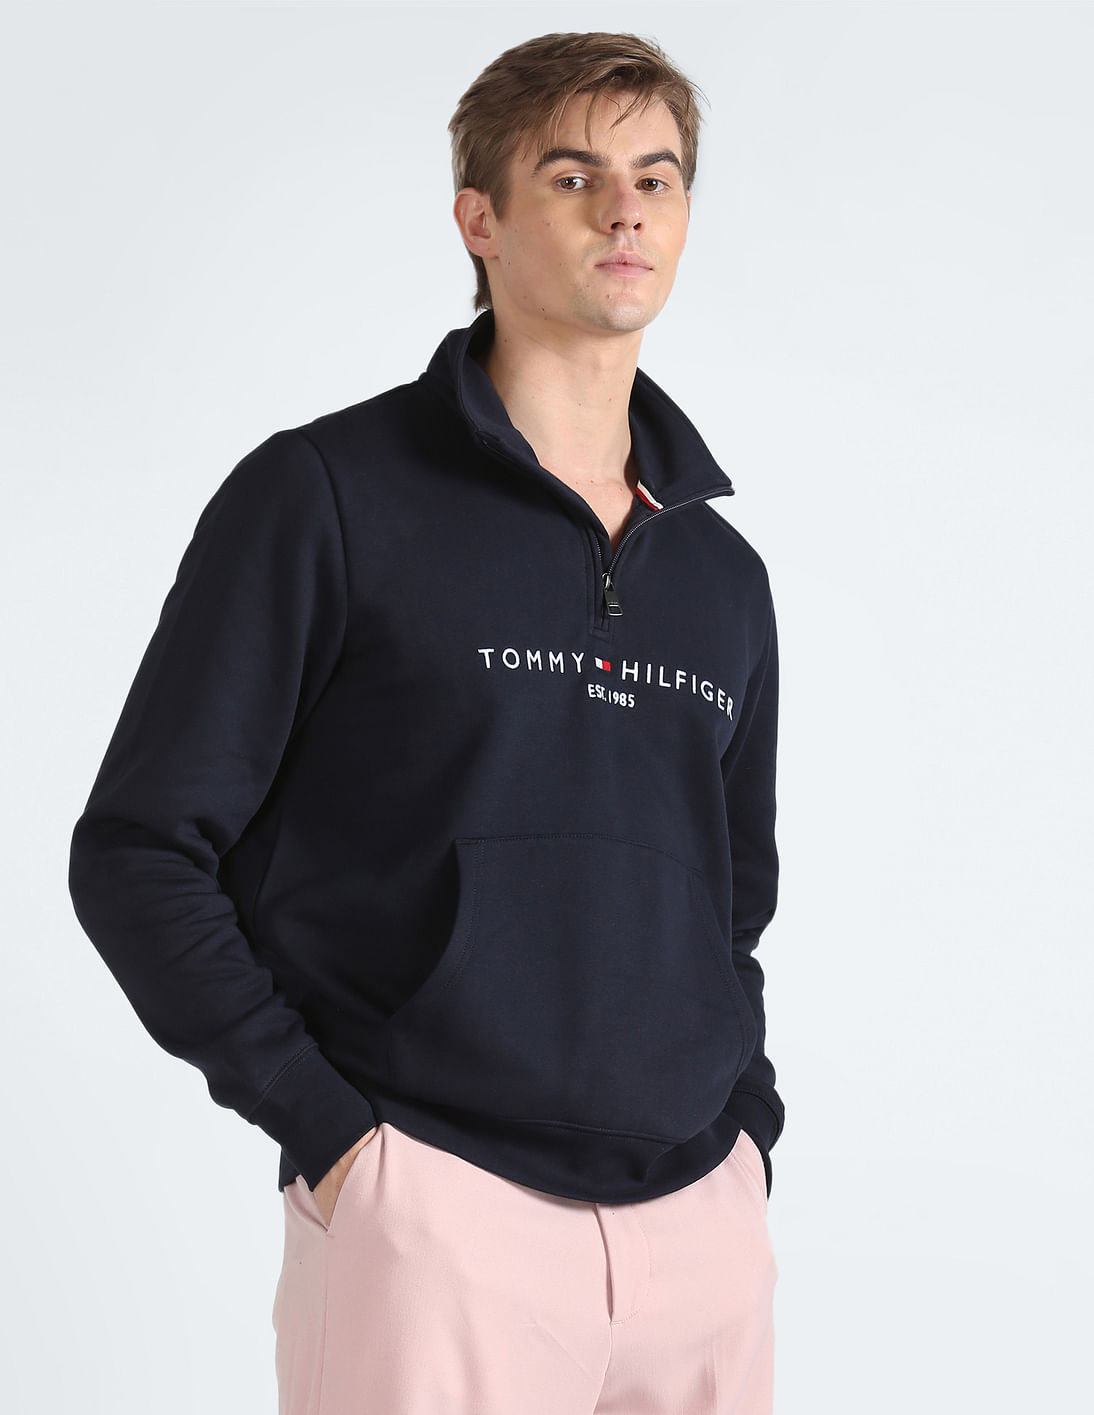 Buy Tommy Hilfiger Oversize Fit Cotton Sweatshirt - NNNOW.com